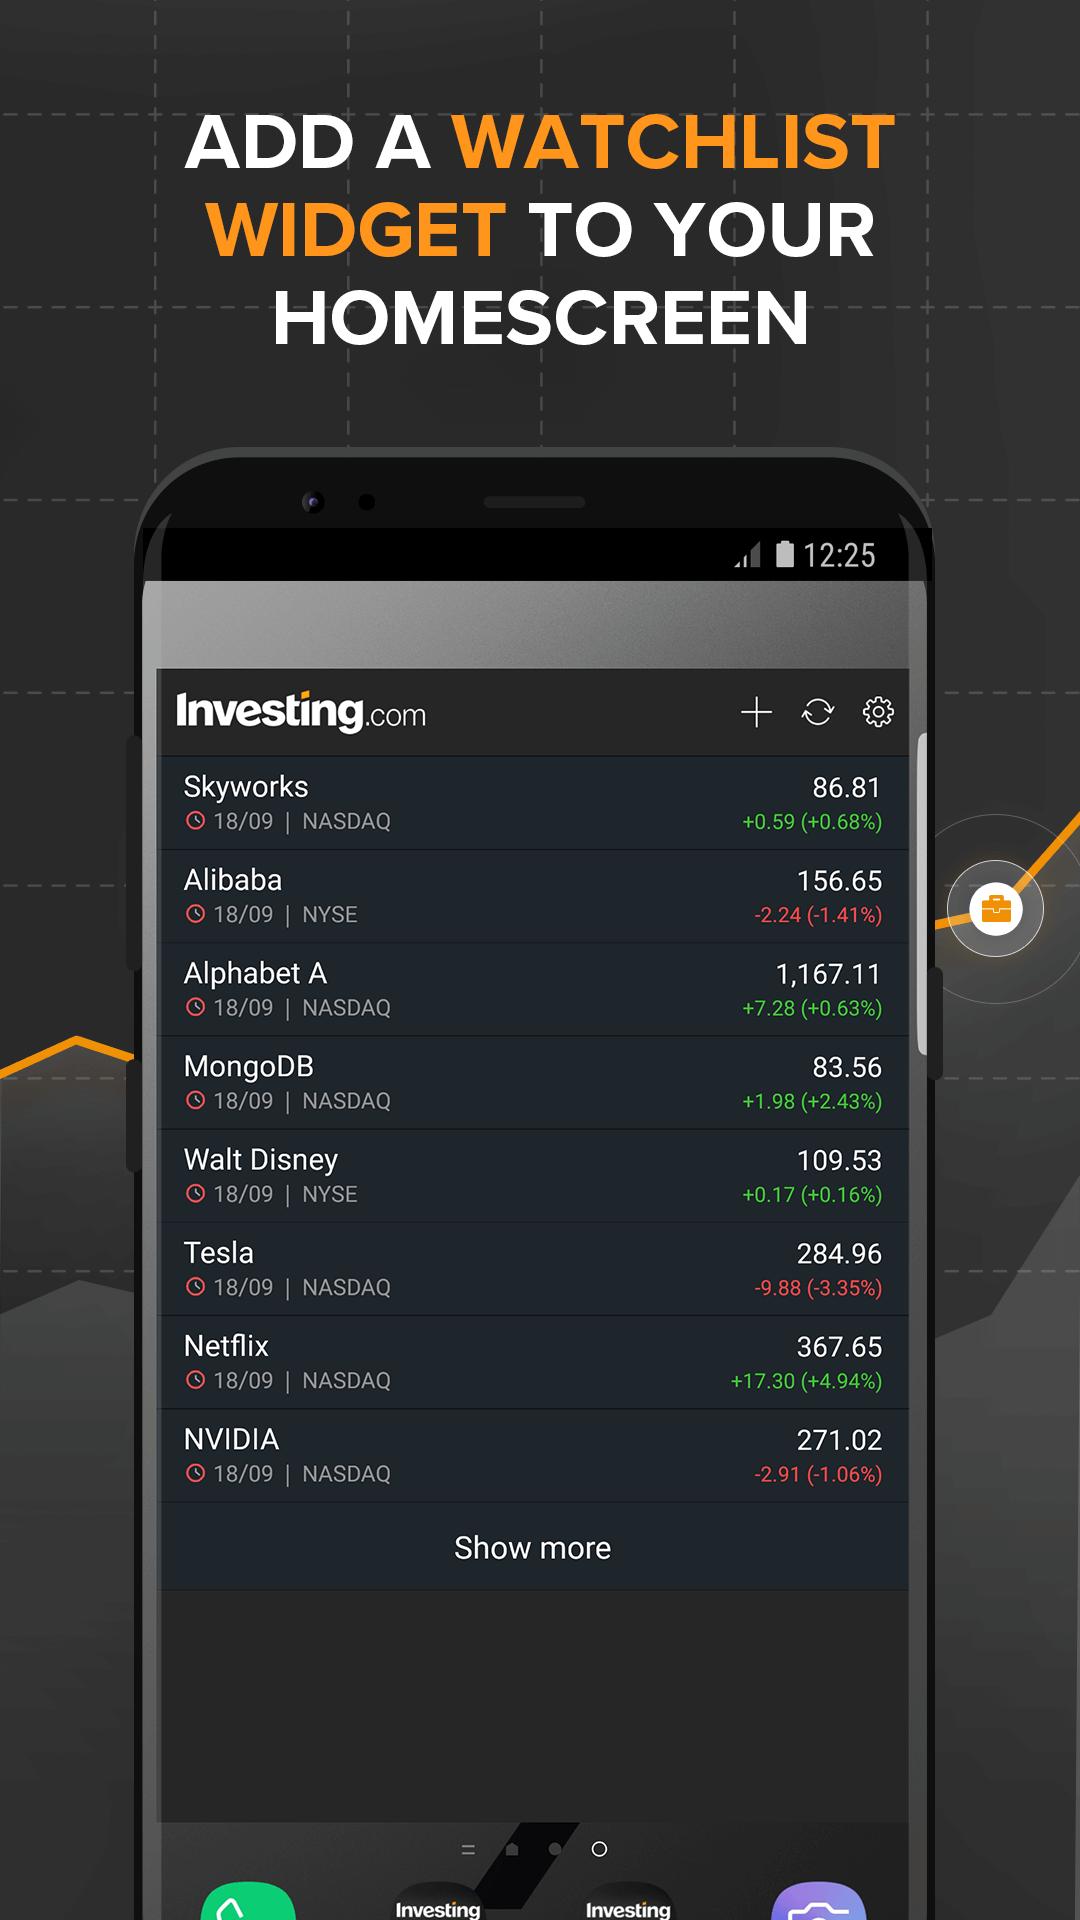 Investing.com: Stocks, Finance, Markets & News 6.6.5 Screenshot 7